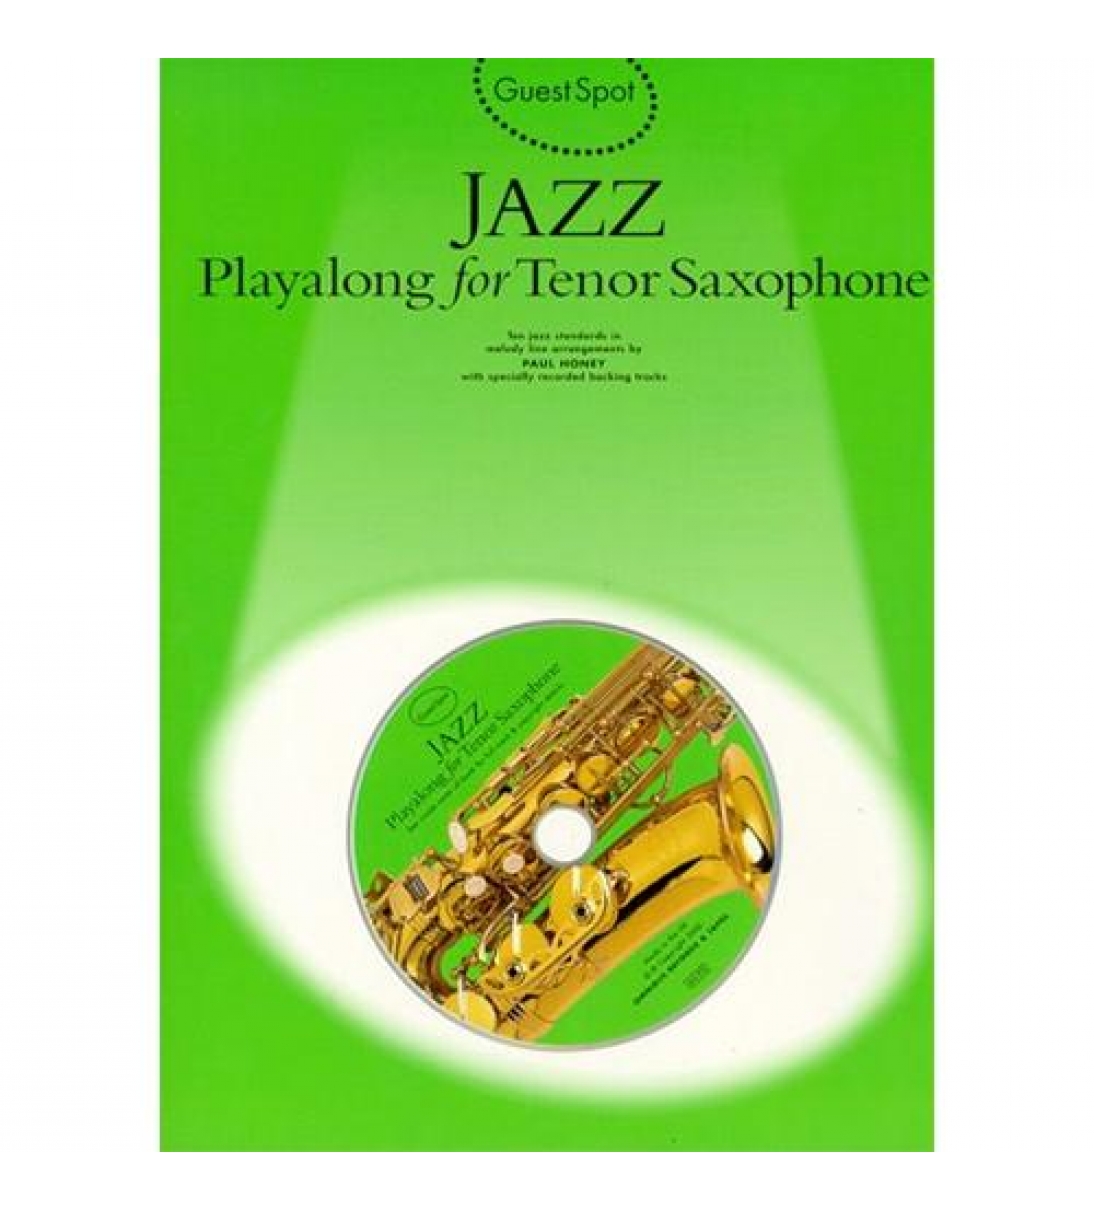 Guest spot: jazz play along for tenor saxophone - Book con CD